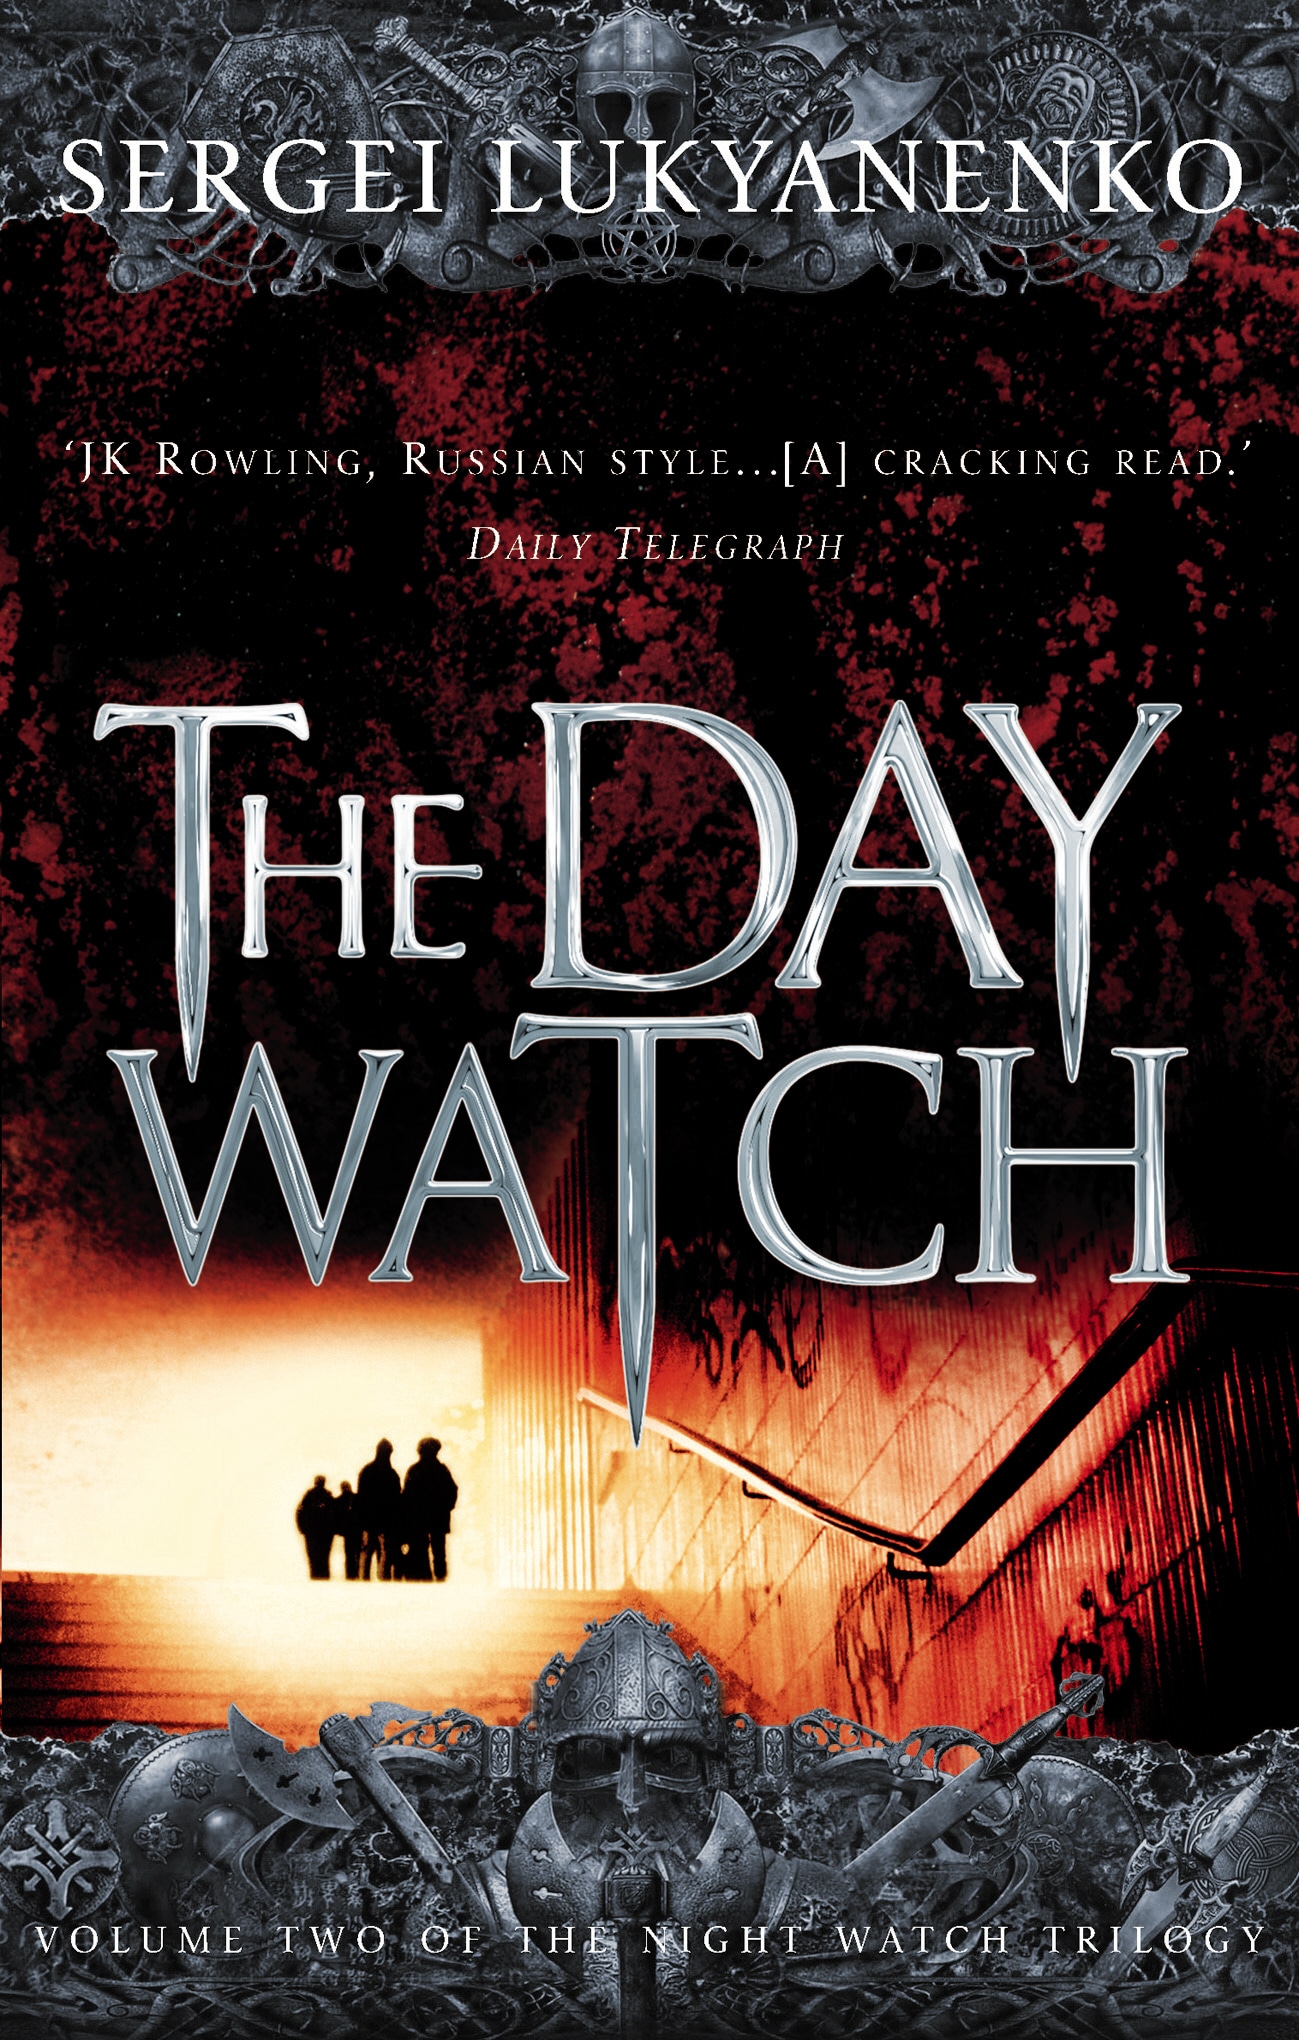 Book “The Day Watch” by Sergei Lukyanenko, Vladimir Vasiliev — January 3, 2008